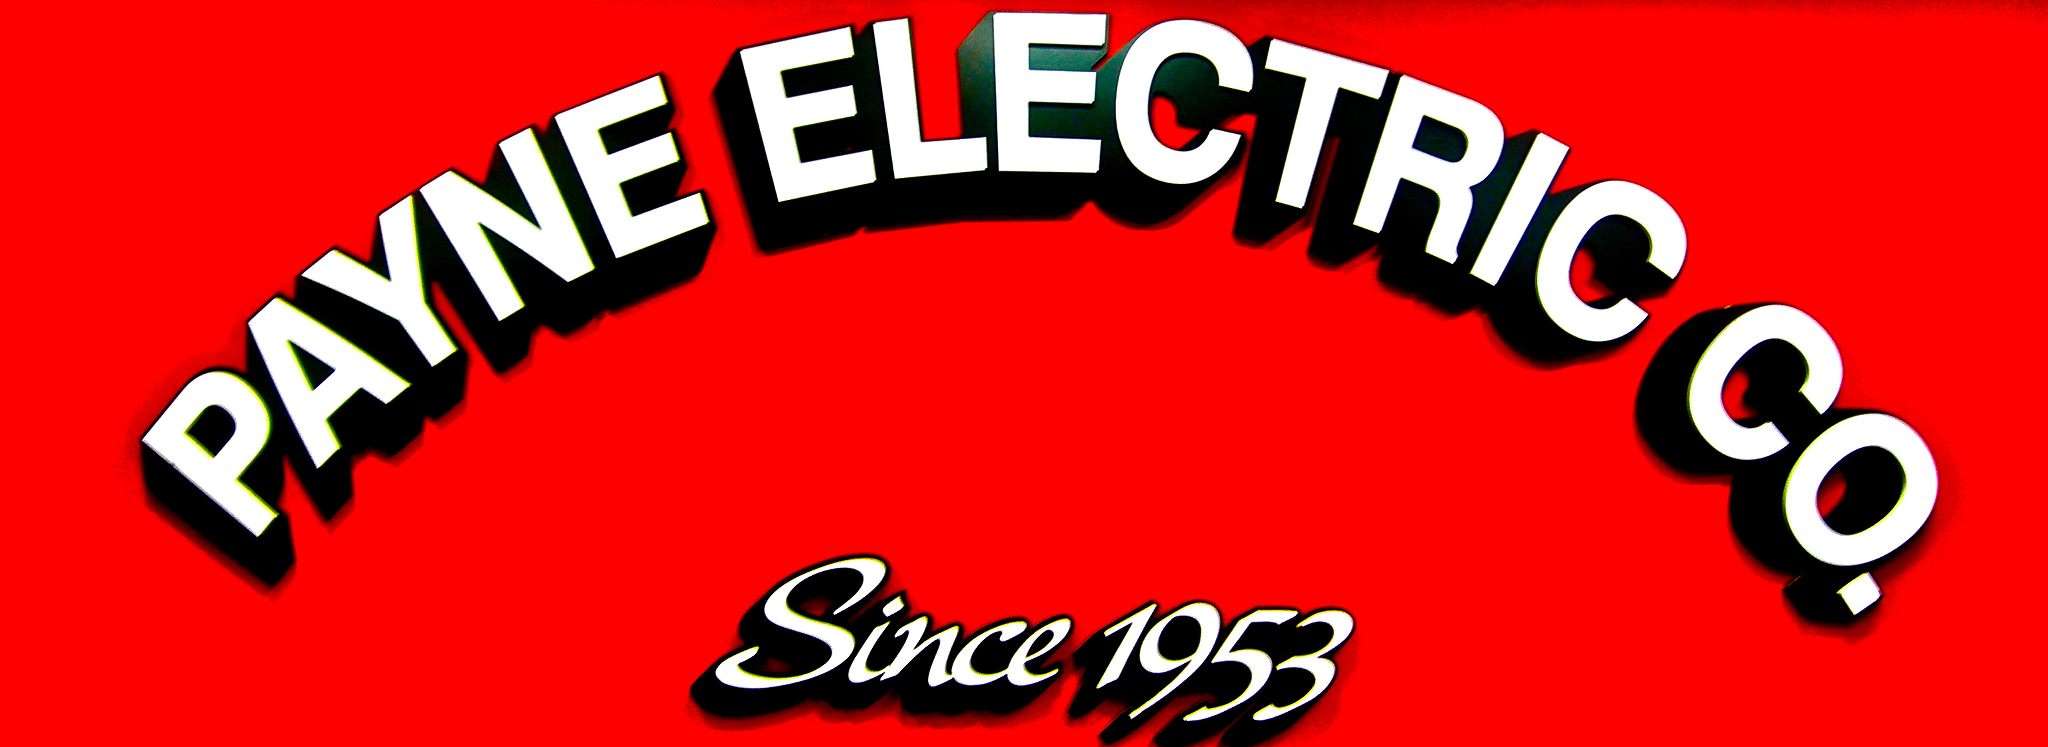 Payne Electric Co., Inc. Logo